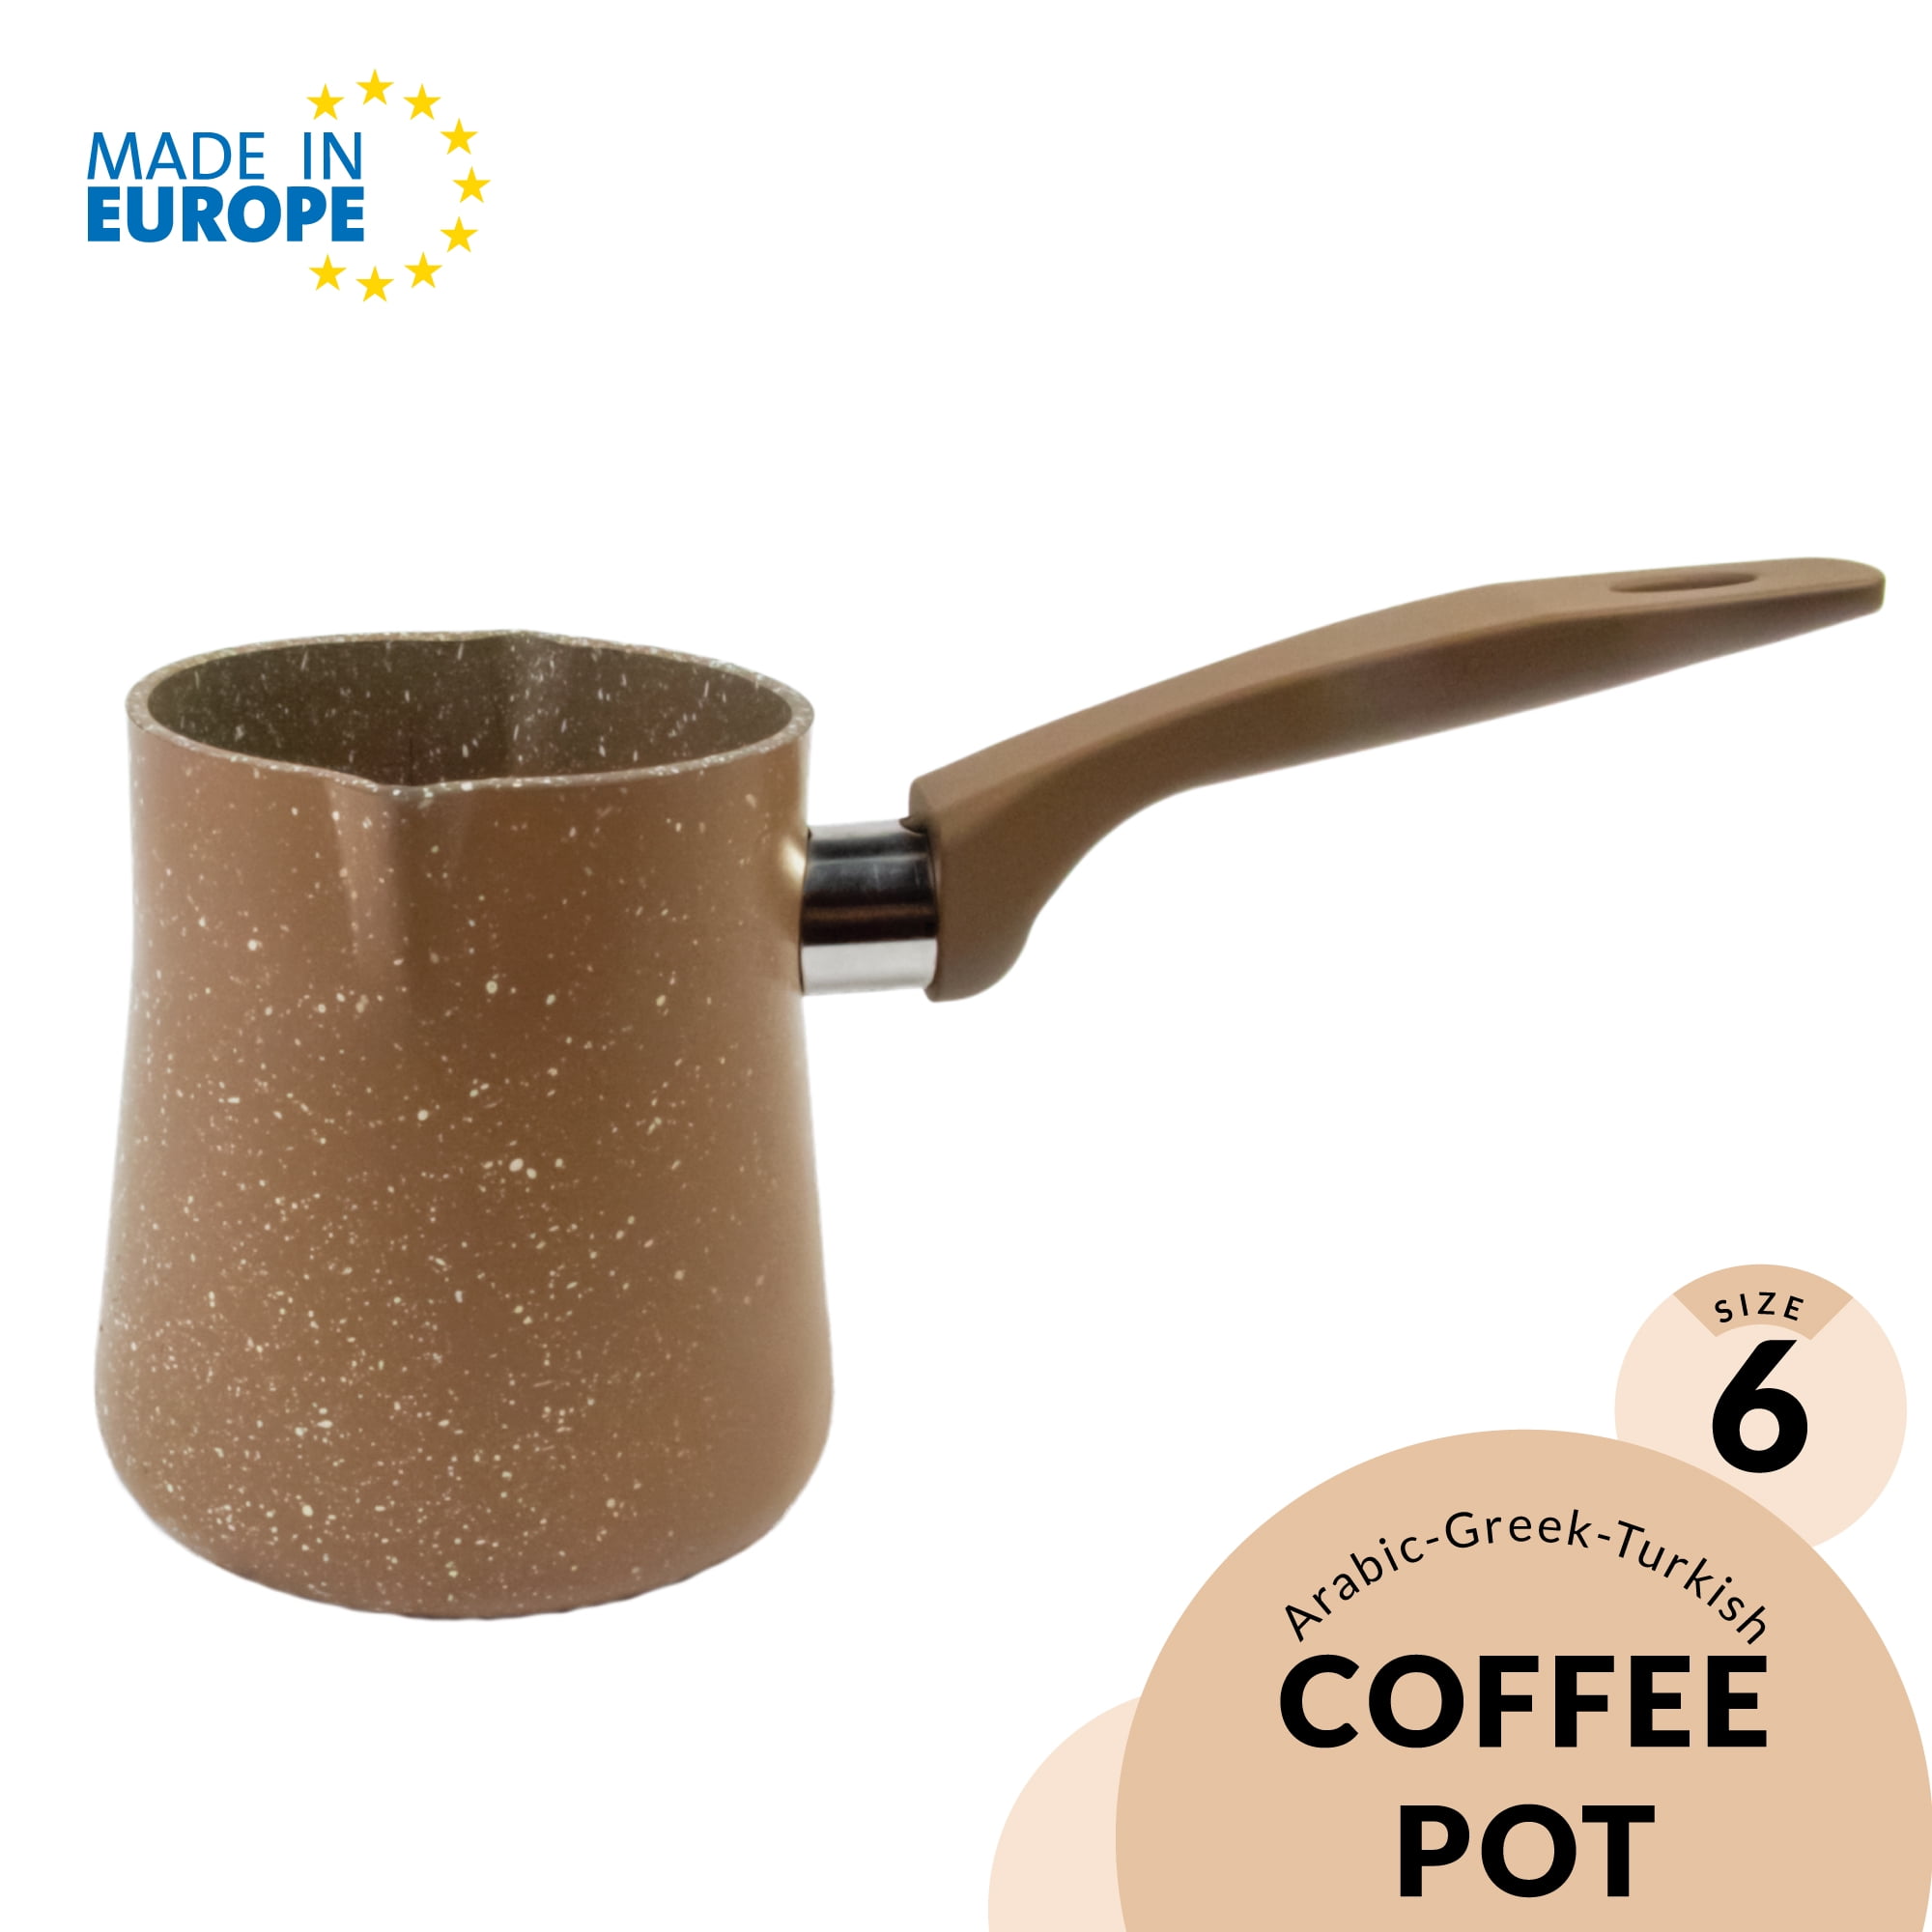 12 Oz Turkish Coffee Pot - Briki Greek, Arabic, Turkish Coffee Maker with  Wooden